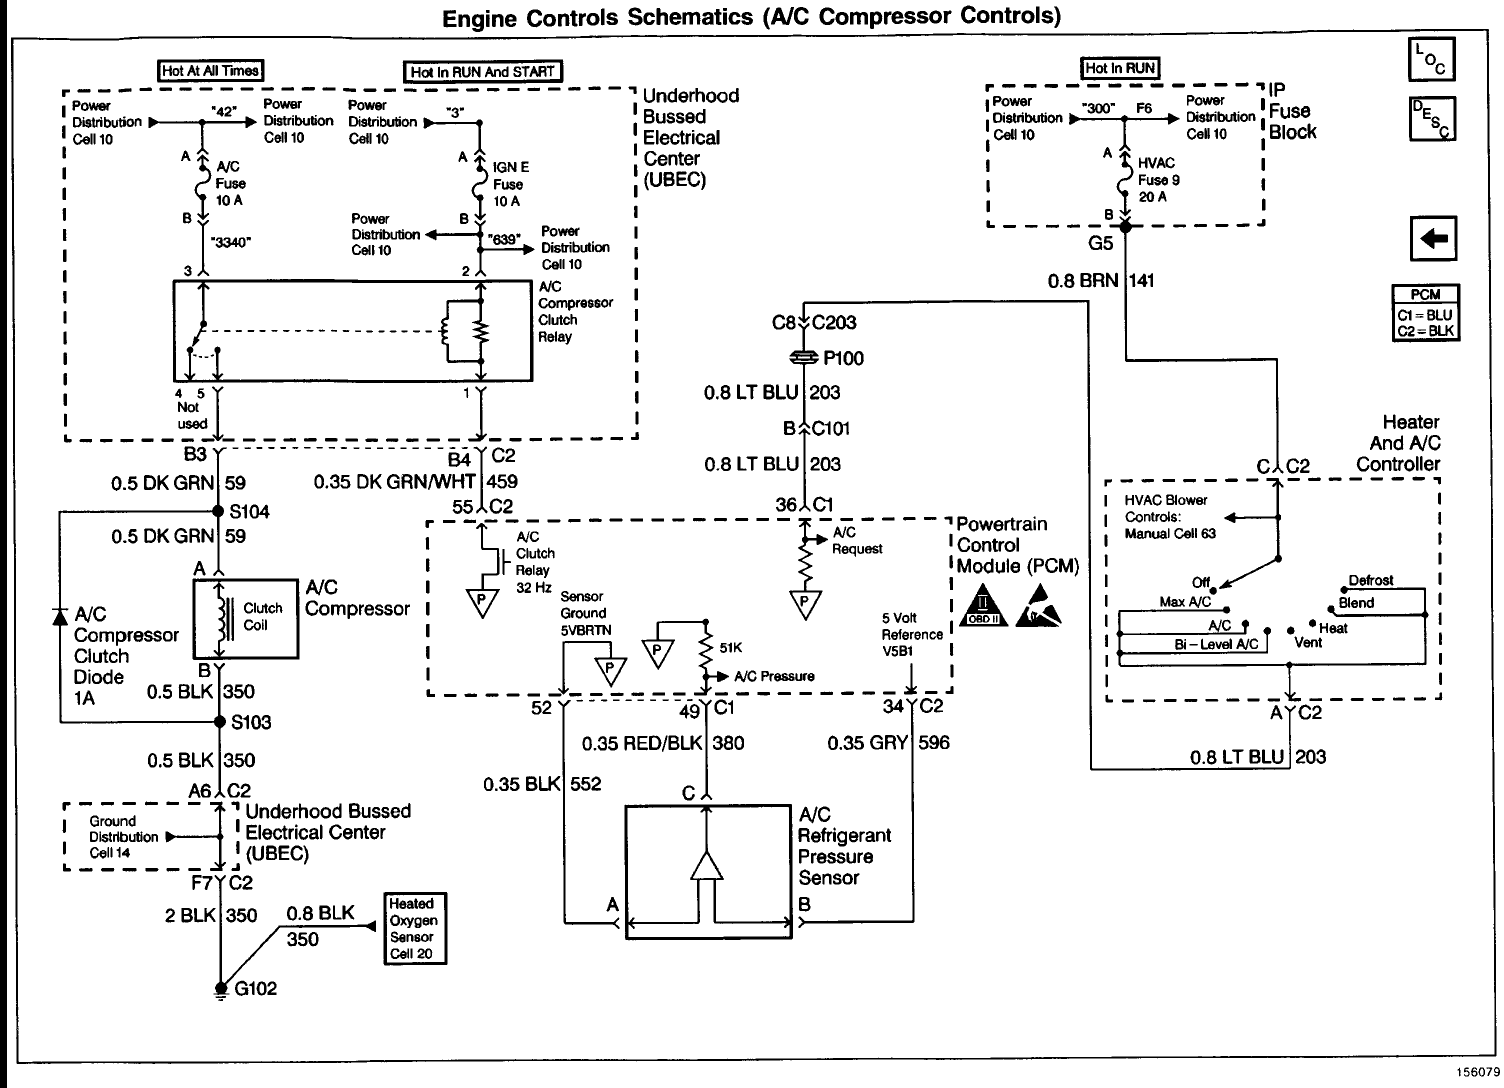 2003 Chevy Silverado Climate Control Wiring Diagram from blazerforum.com